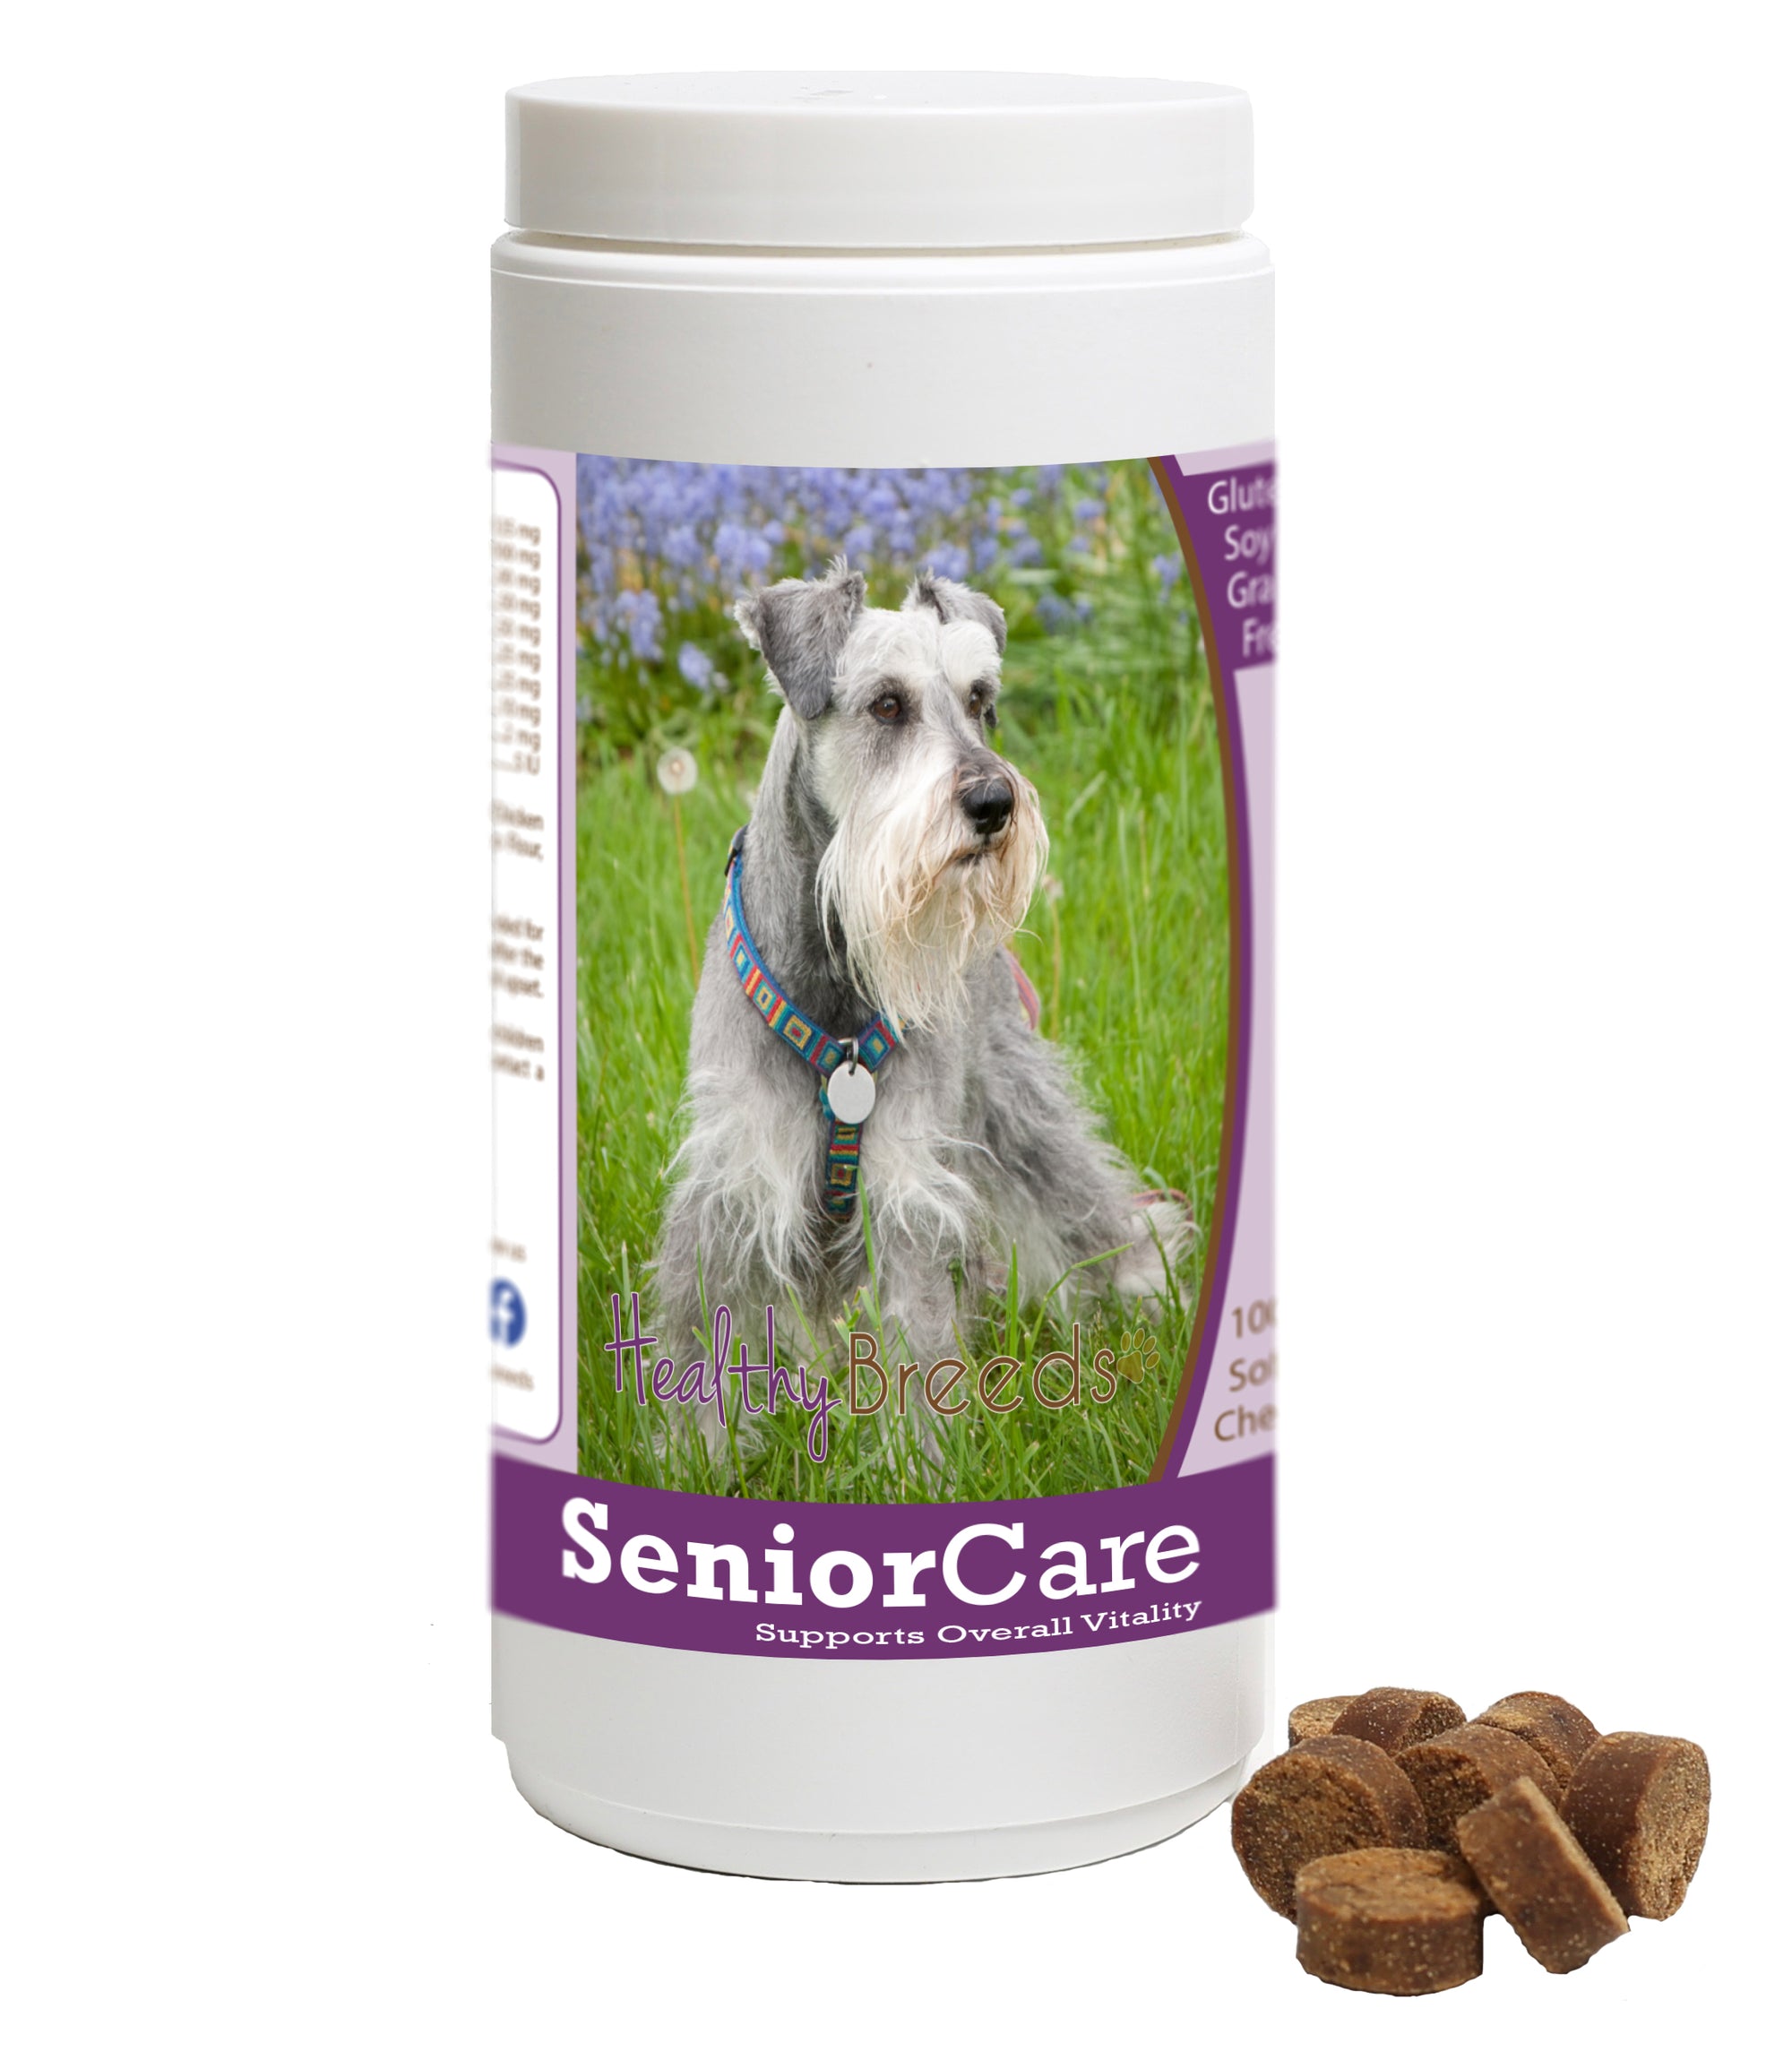 Healthy Breeds Miniature Schnauzer Senior Dog Care Soft Chews 100 Count